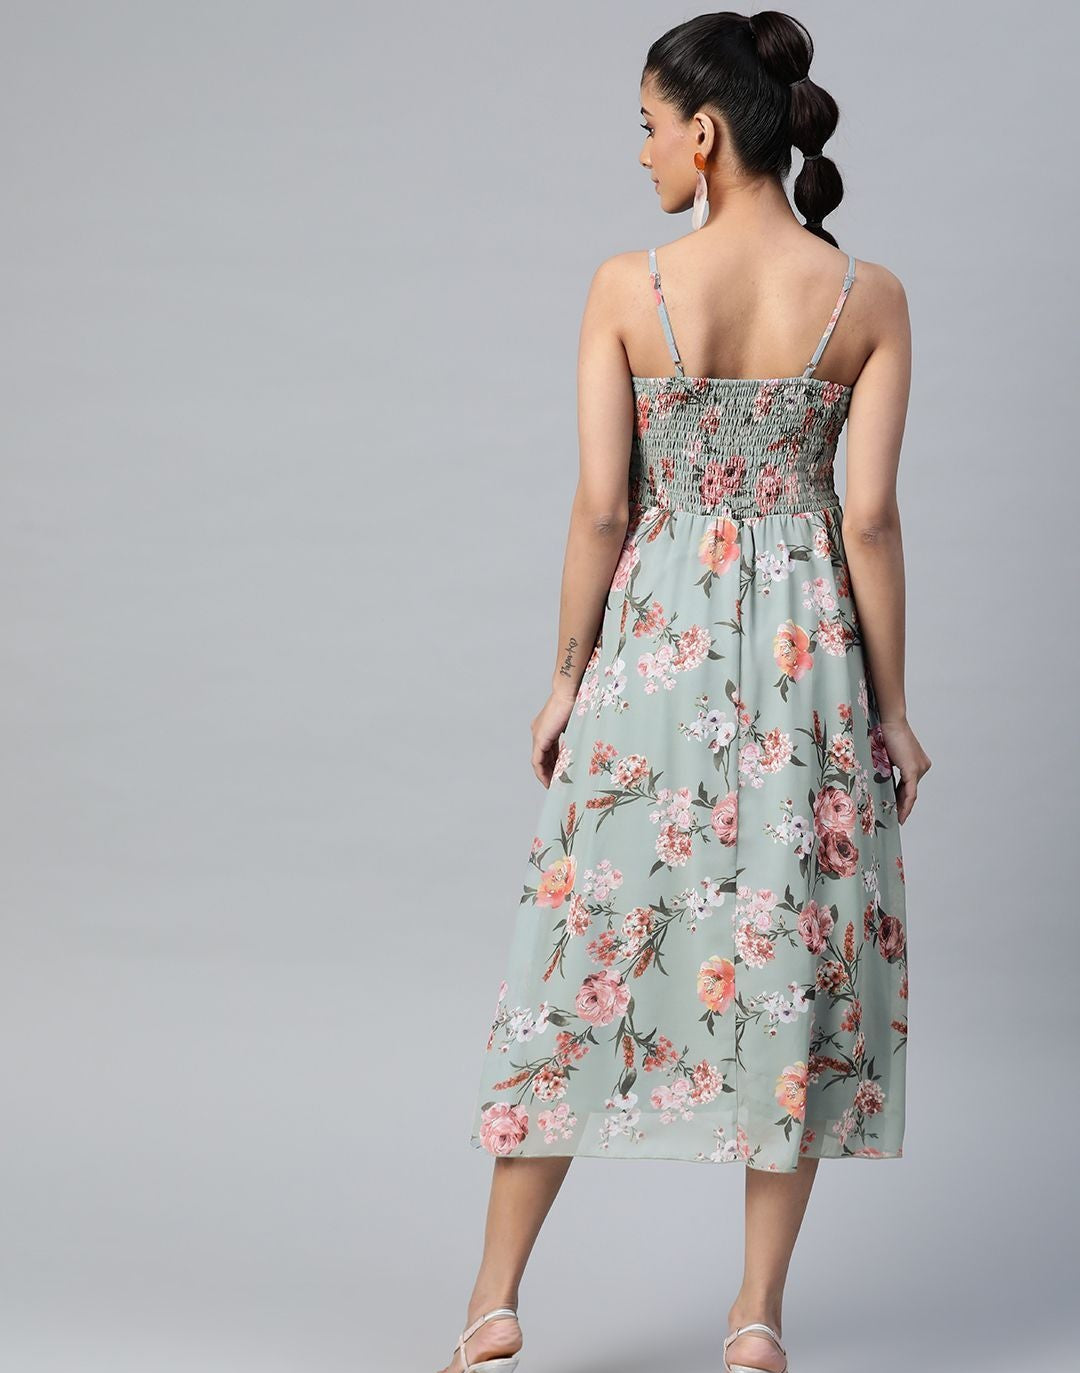 Olive Floral Strappy Midi Dress